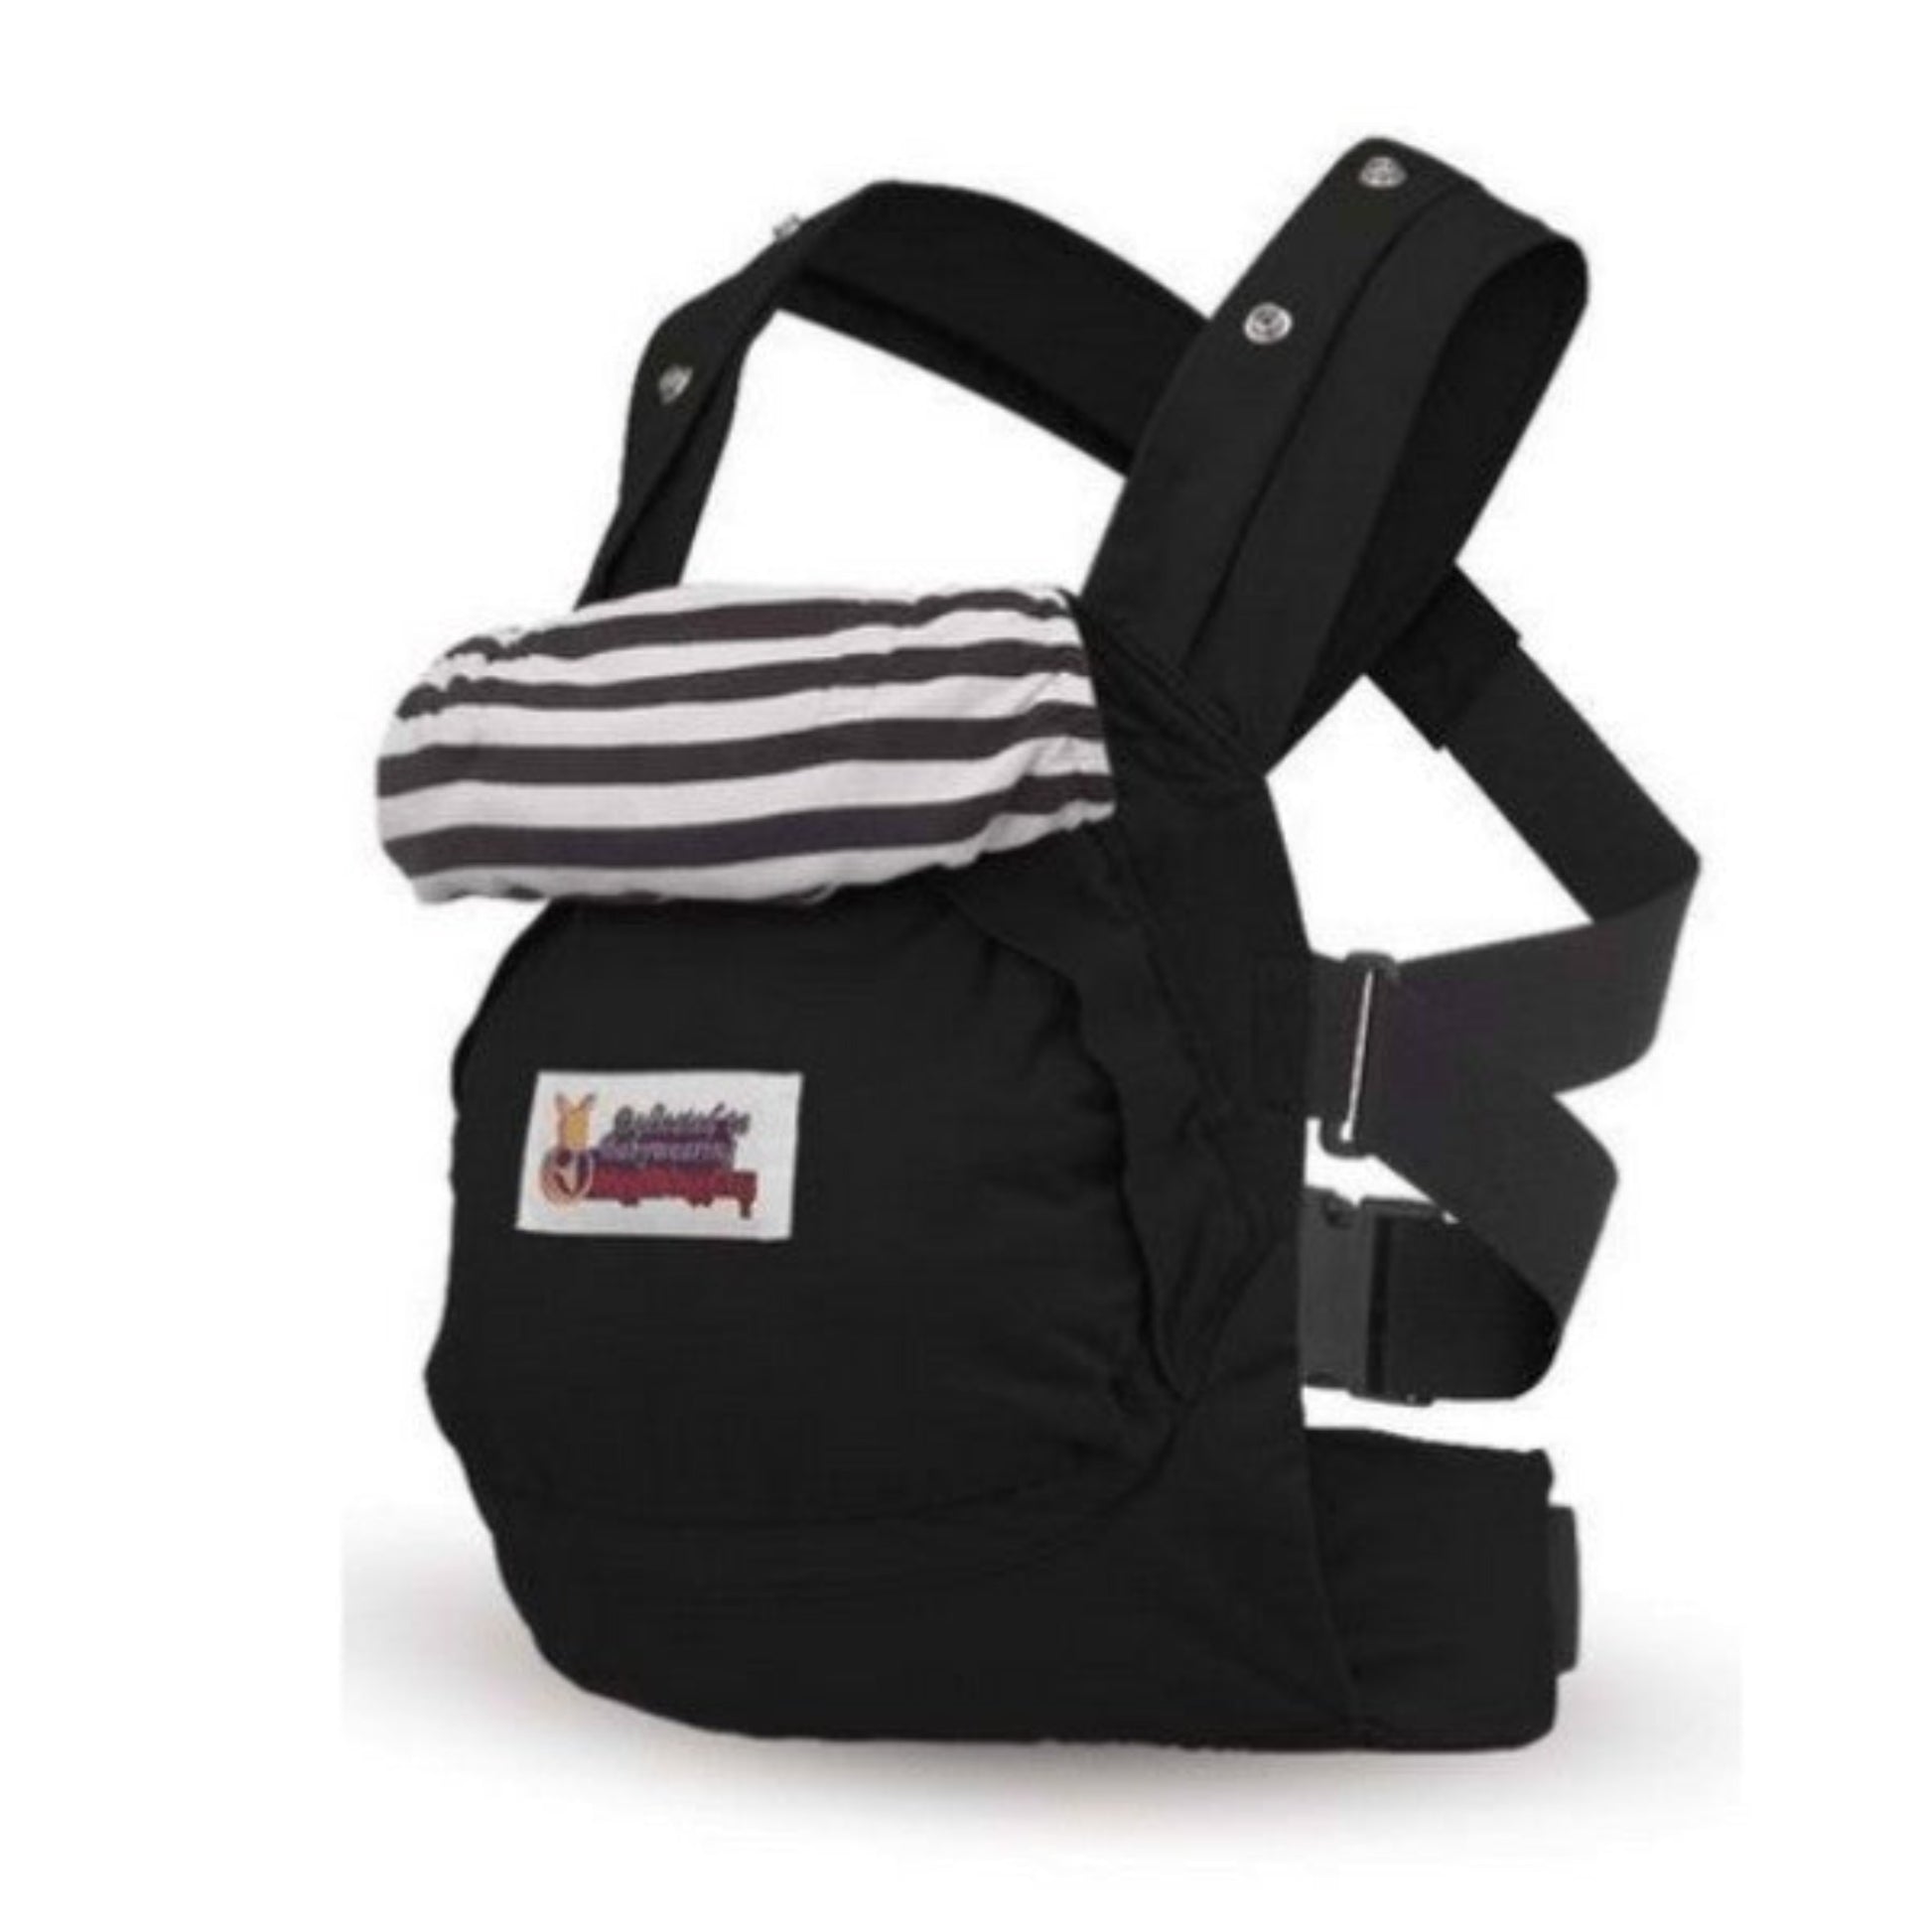 Baby sling Mamaway Hugaroo Baby Carrier - Black Mamaway 129.00